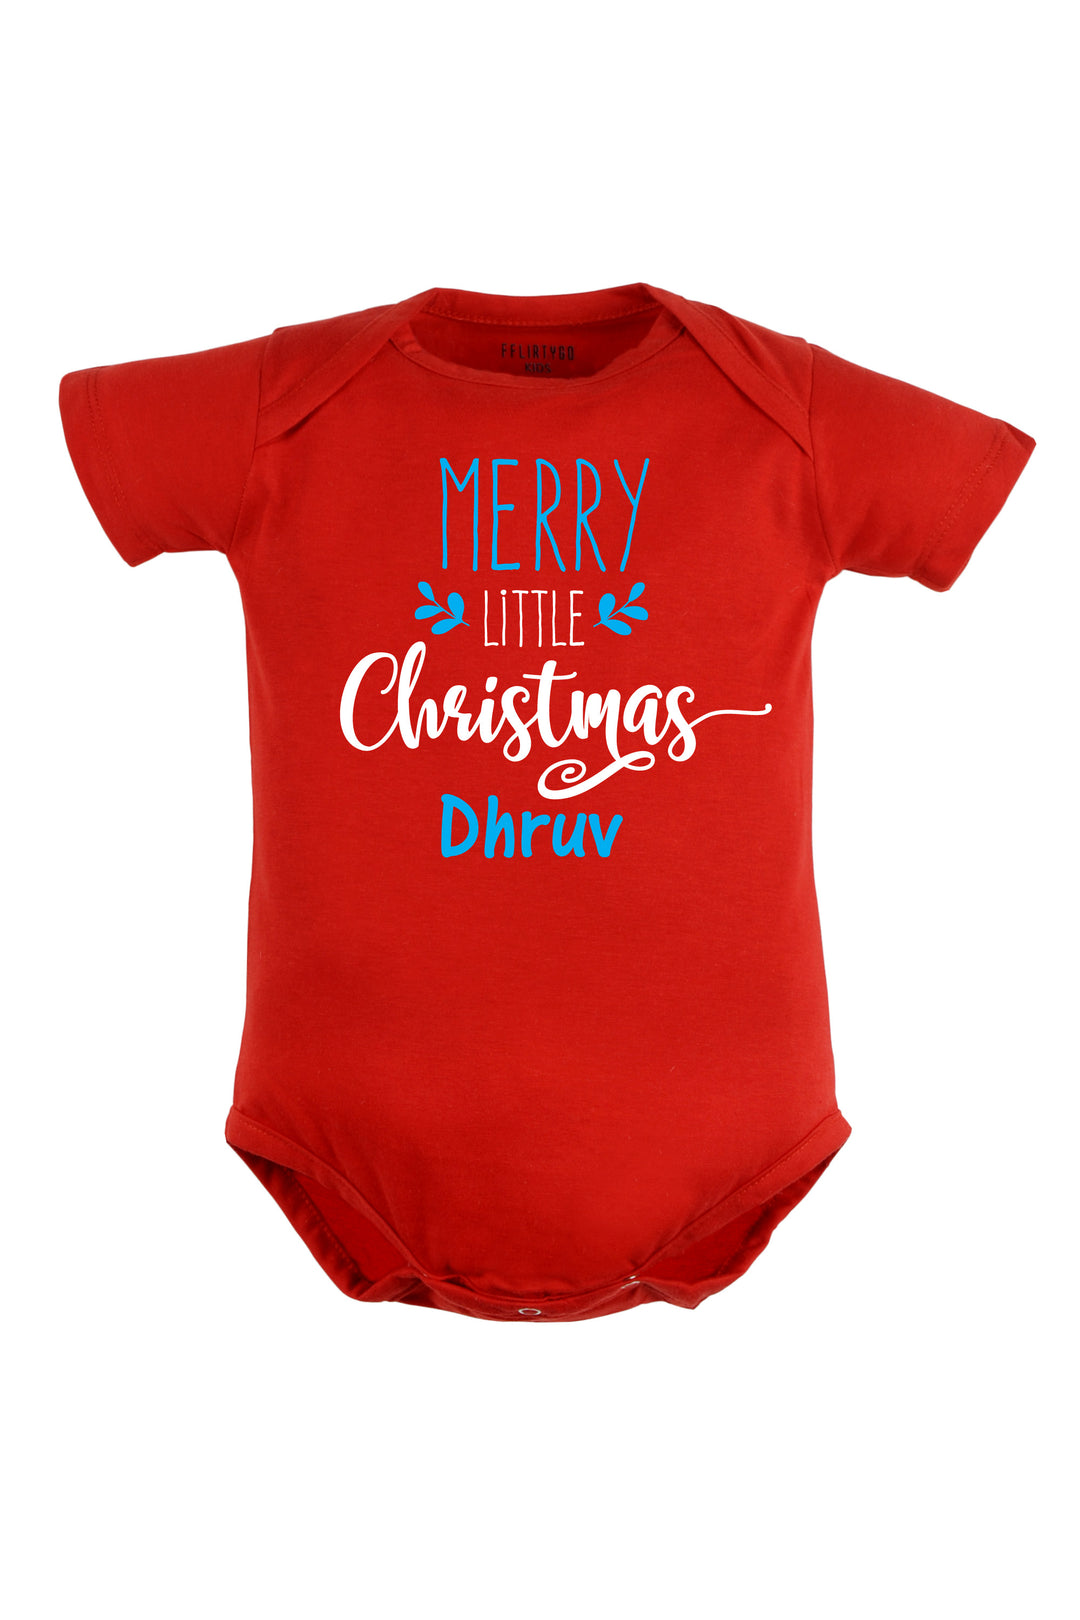 Merry Little Christmas Baby Romper | Onesies w/ Custom Name